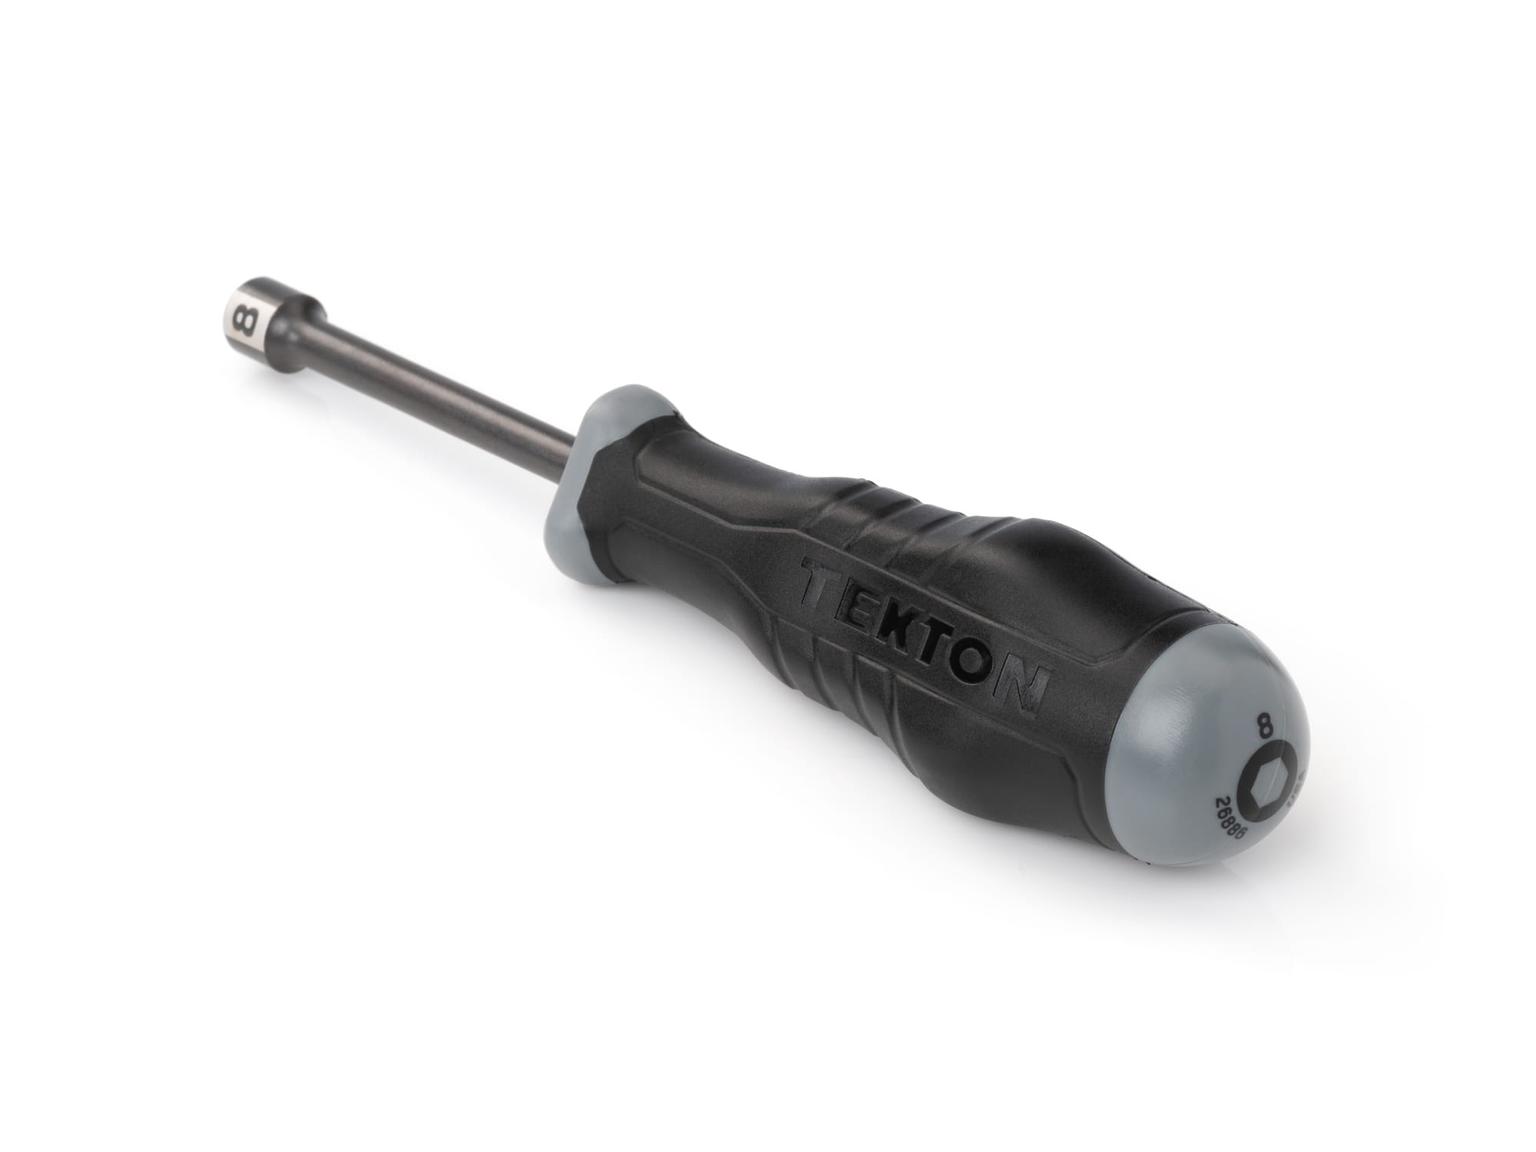 TEKTON 26886-T 8 mm High-Torque Black Oxide Blade Nut Driver